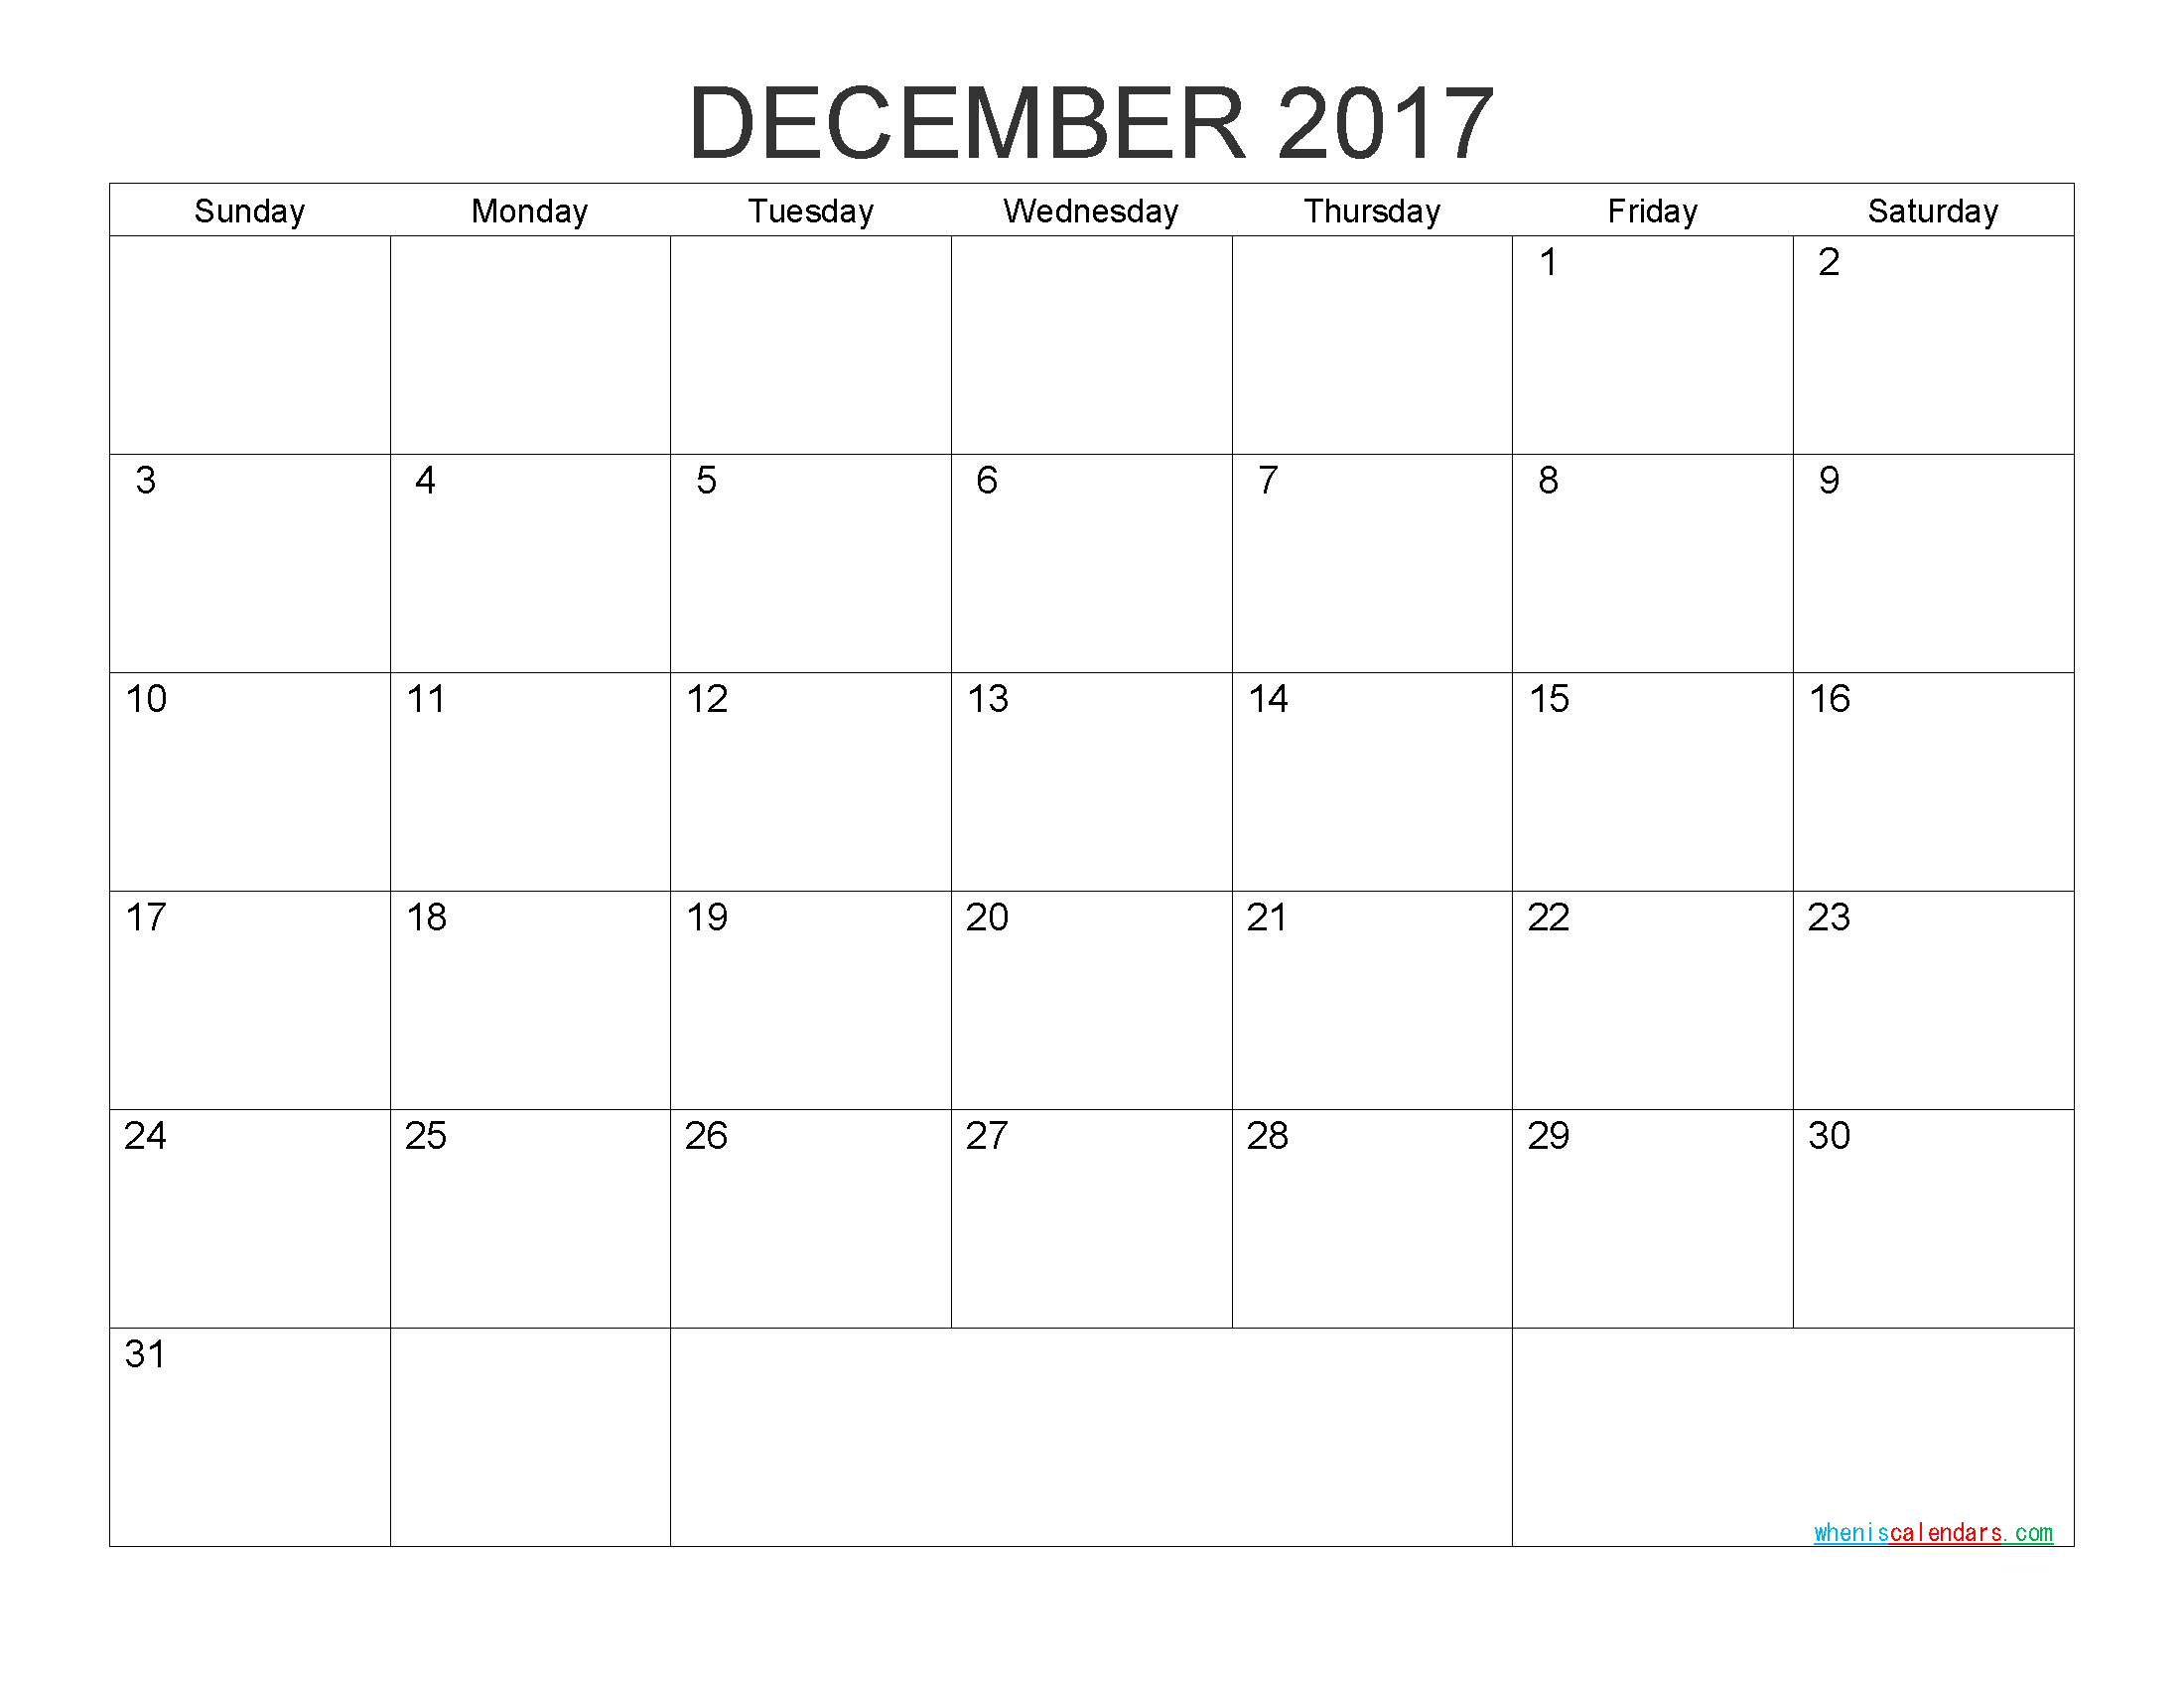 freebies-december-2015-wallpaper-calendars-word-s-to-ork-l-e